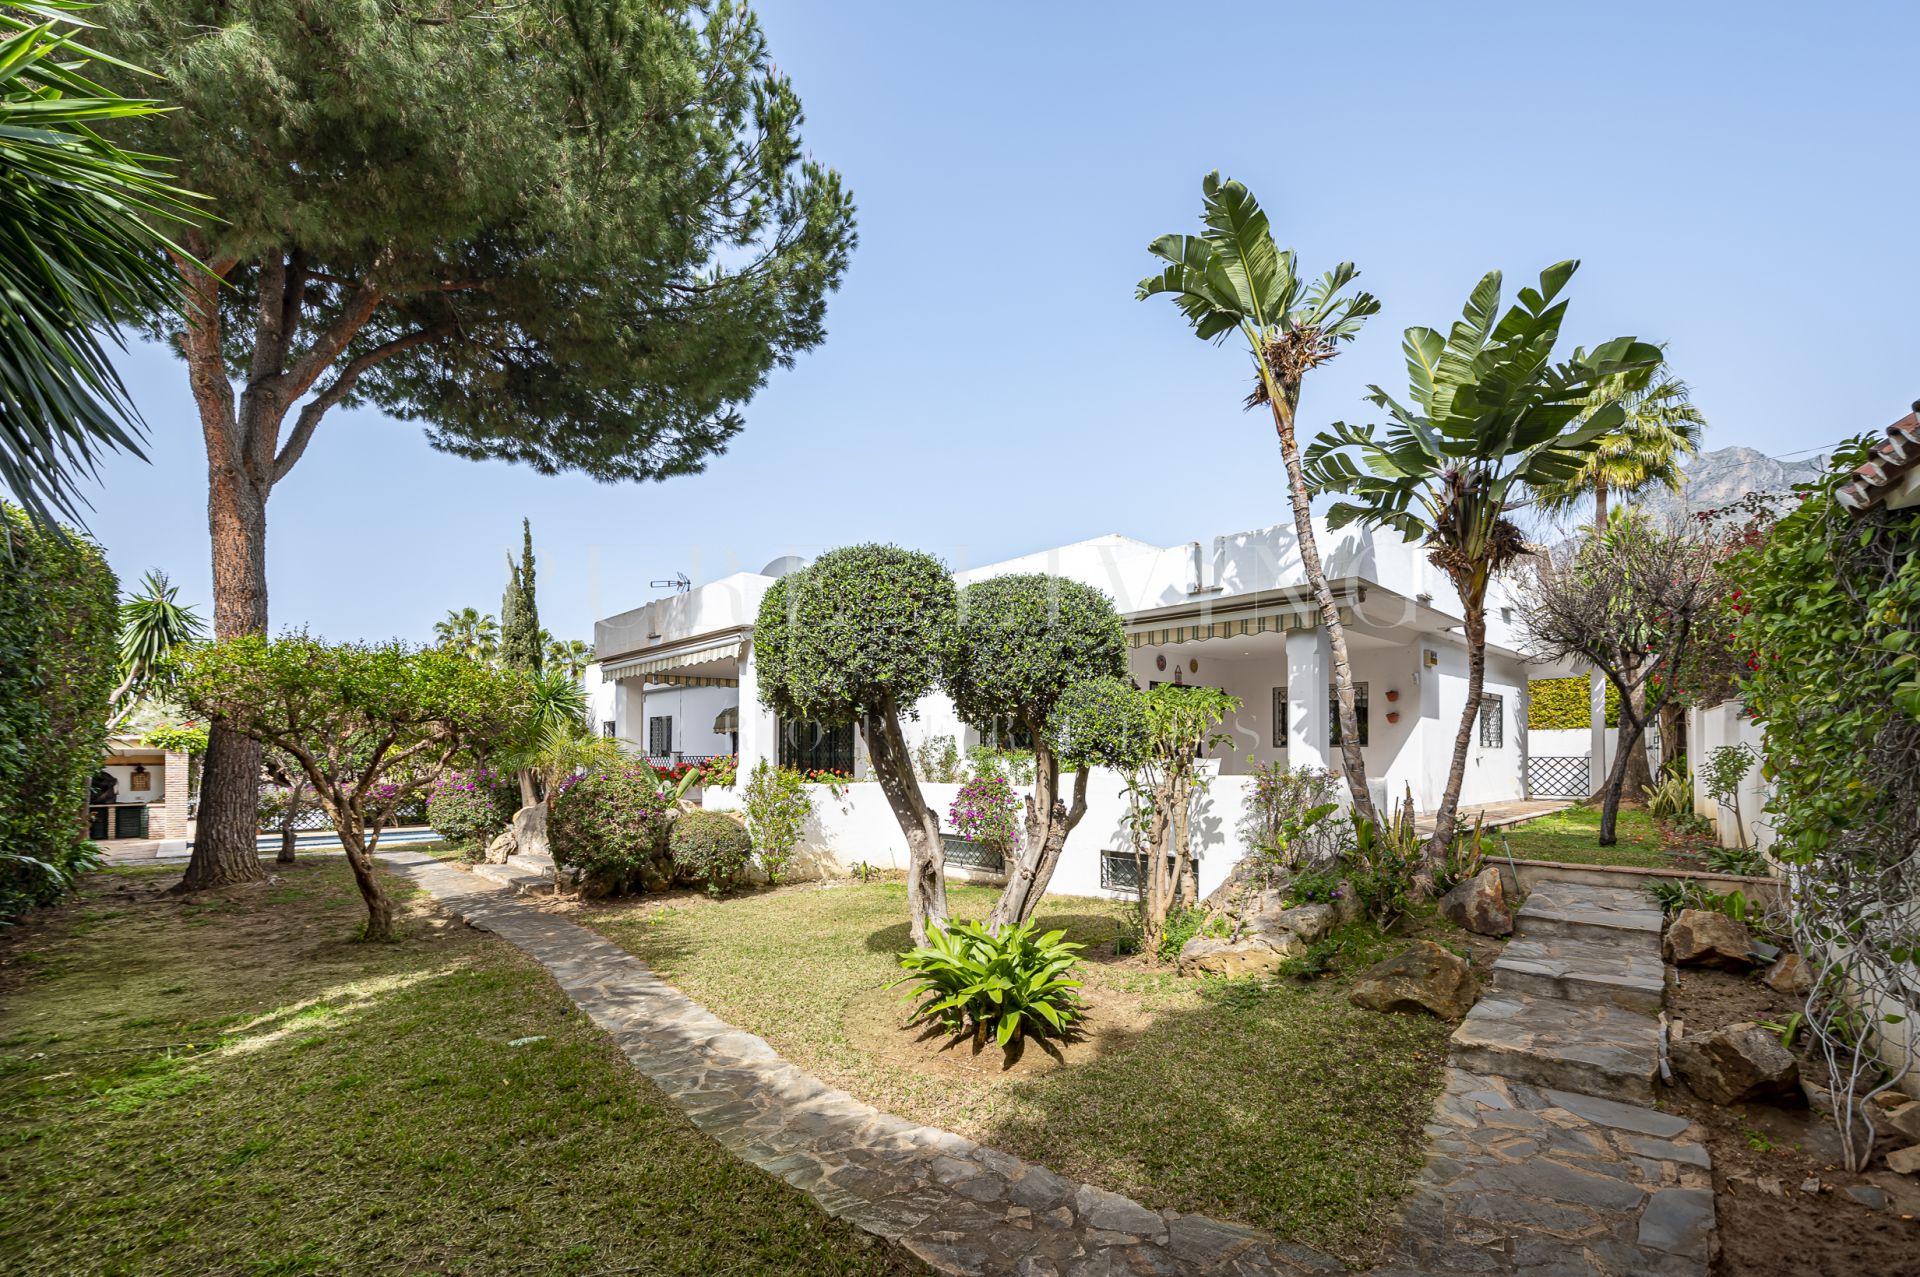 Five bedroom Mediterranean villa in Nagueles with great potential